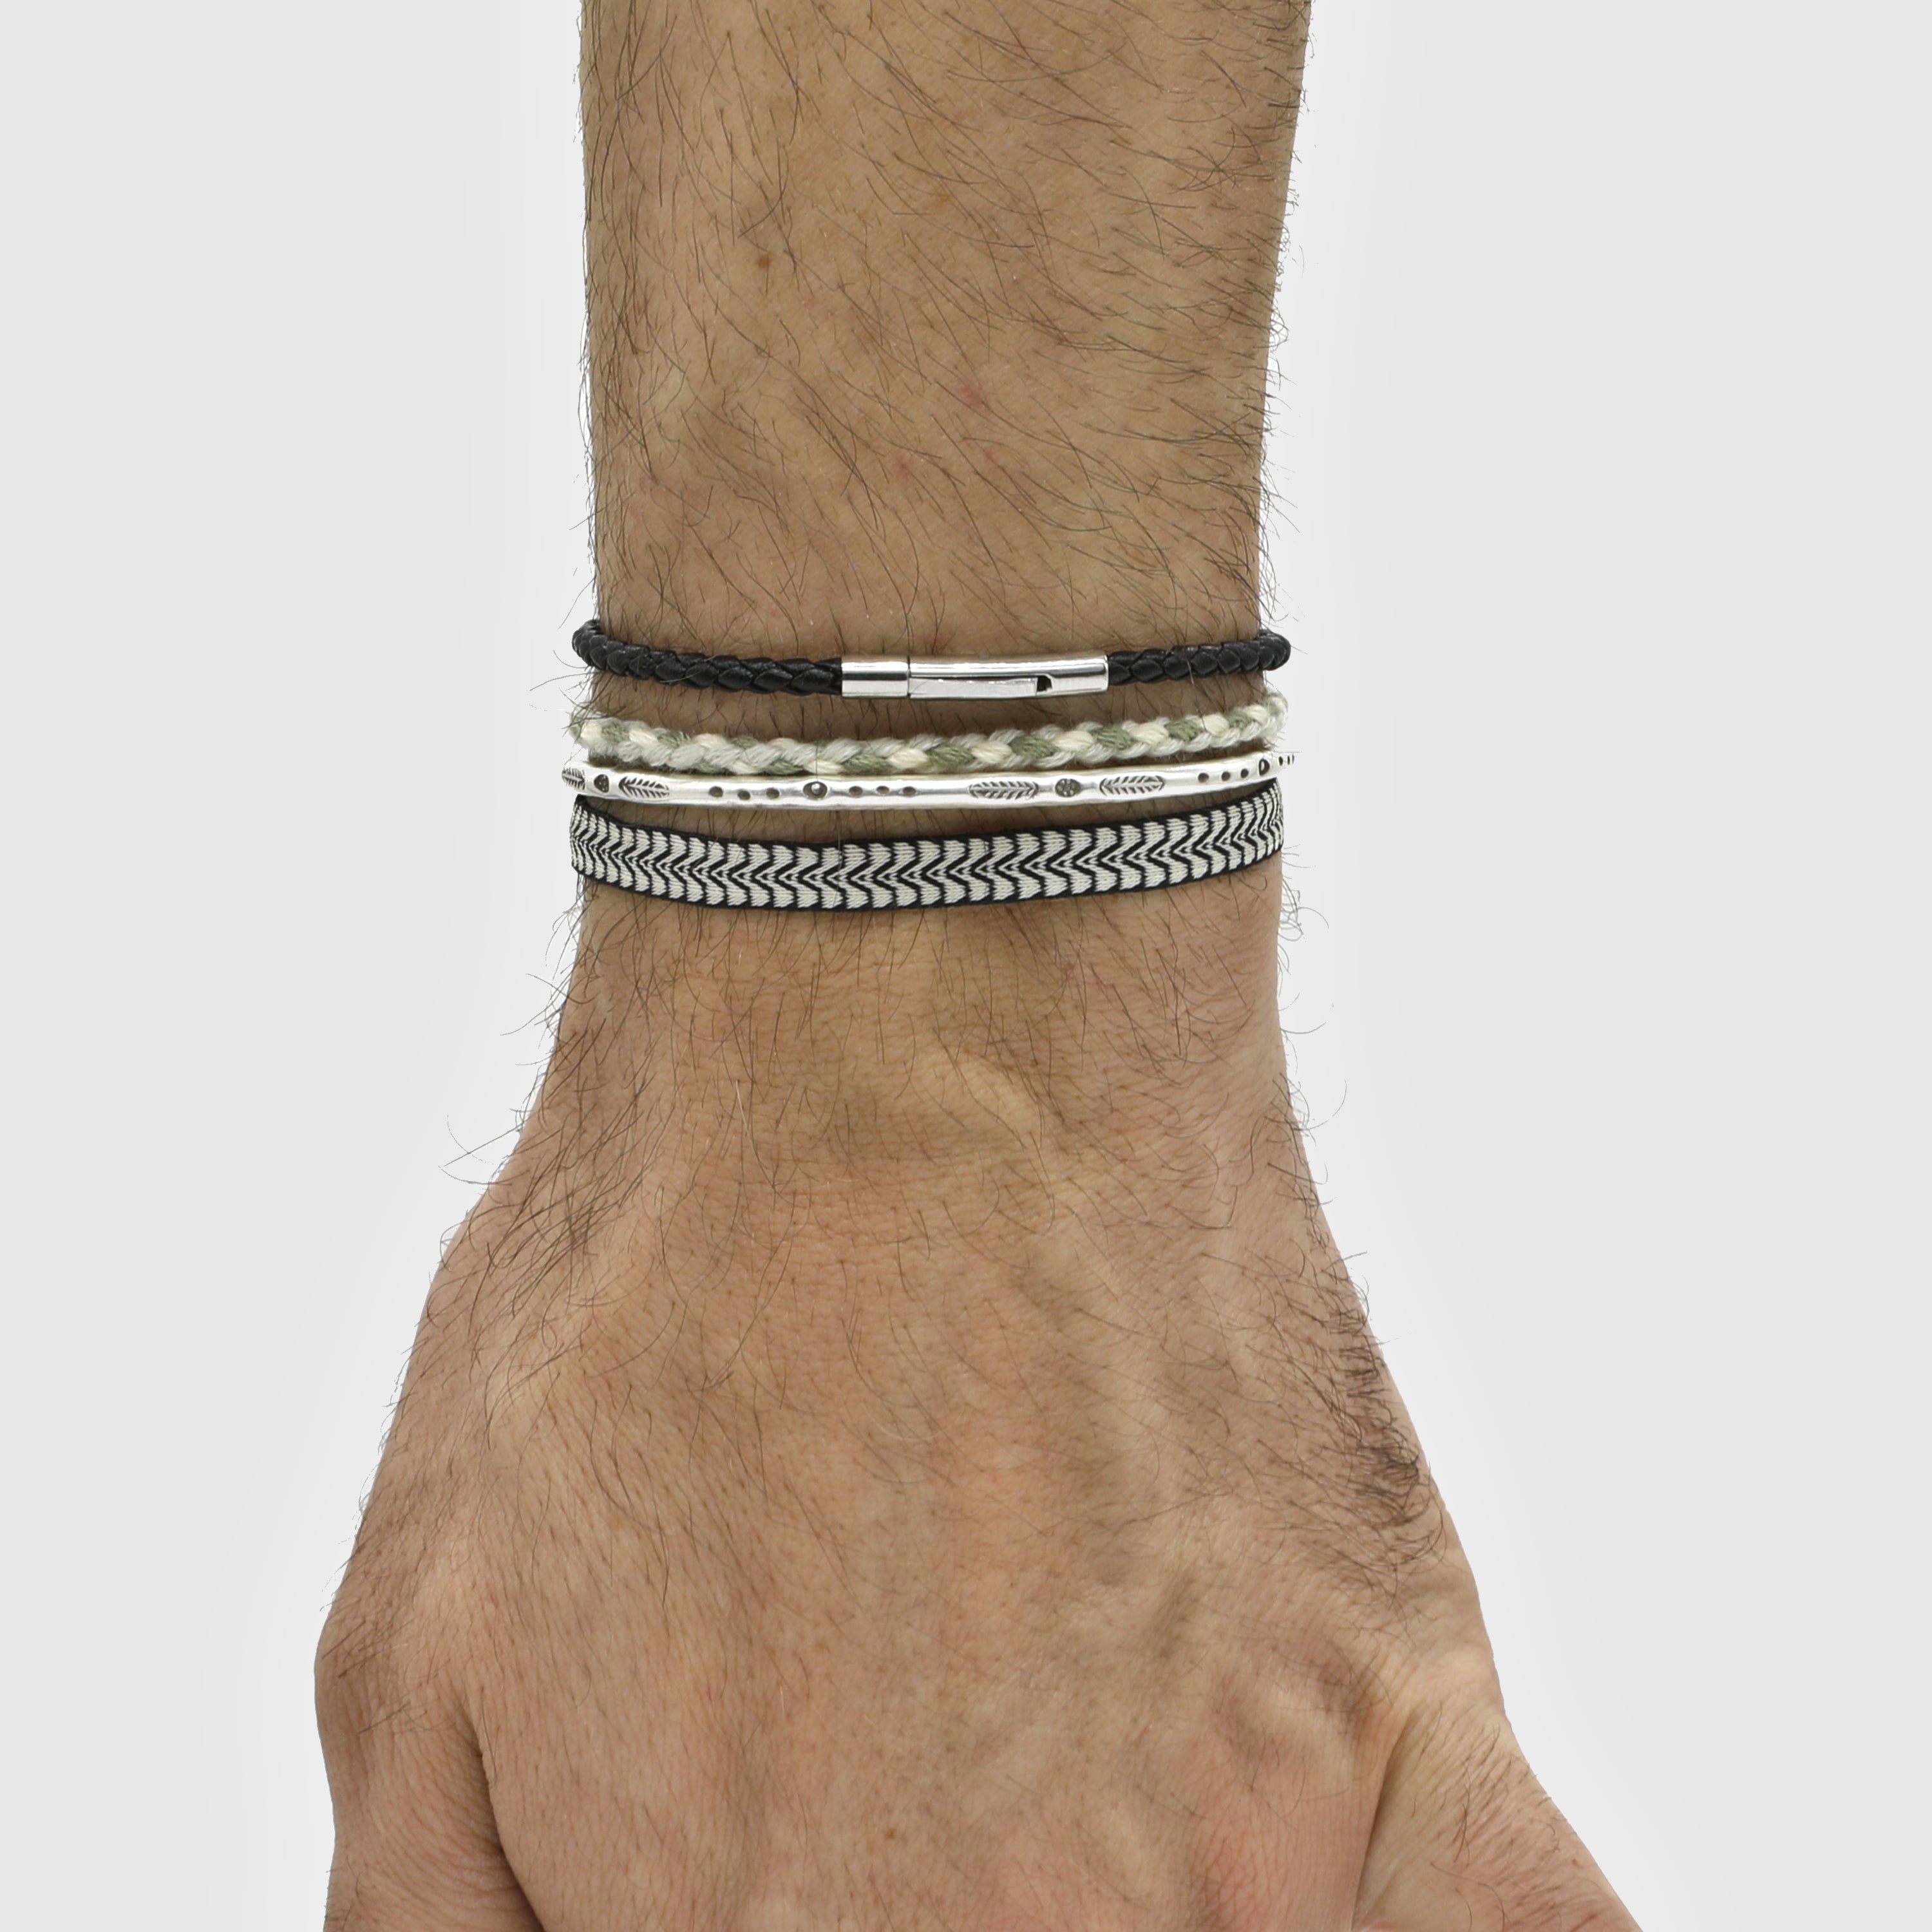 3mm Italian Leather Bracelet With Silver Clasp (Black)-Jewelry-Kompsós